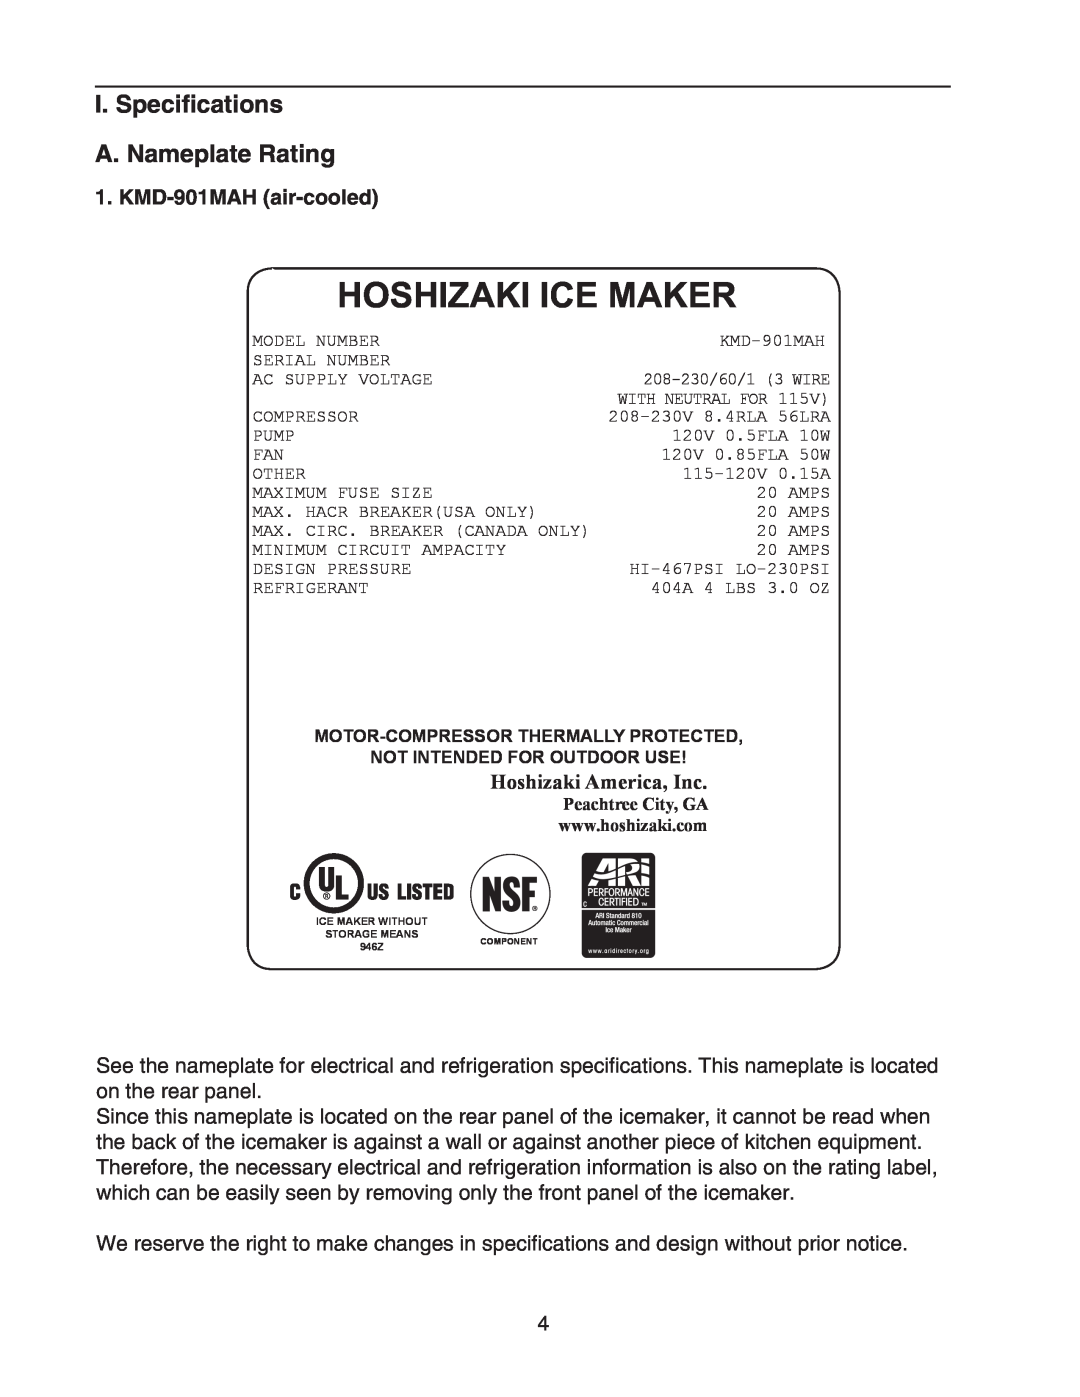 Hoshizaki KMD-901MRH, KMD-901MWH Hoshizaki Ice Maker, I. Specifications A. Nameplate Rating, KMD-901MAH air-cooled 